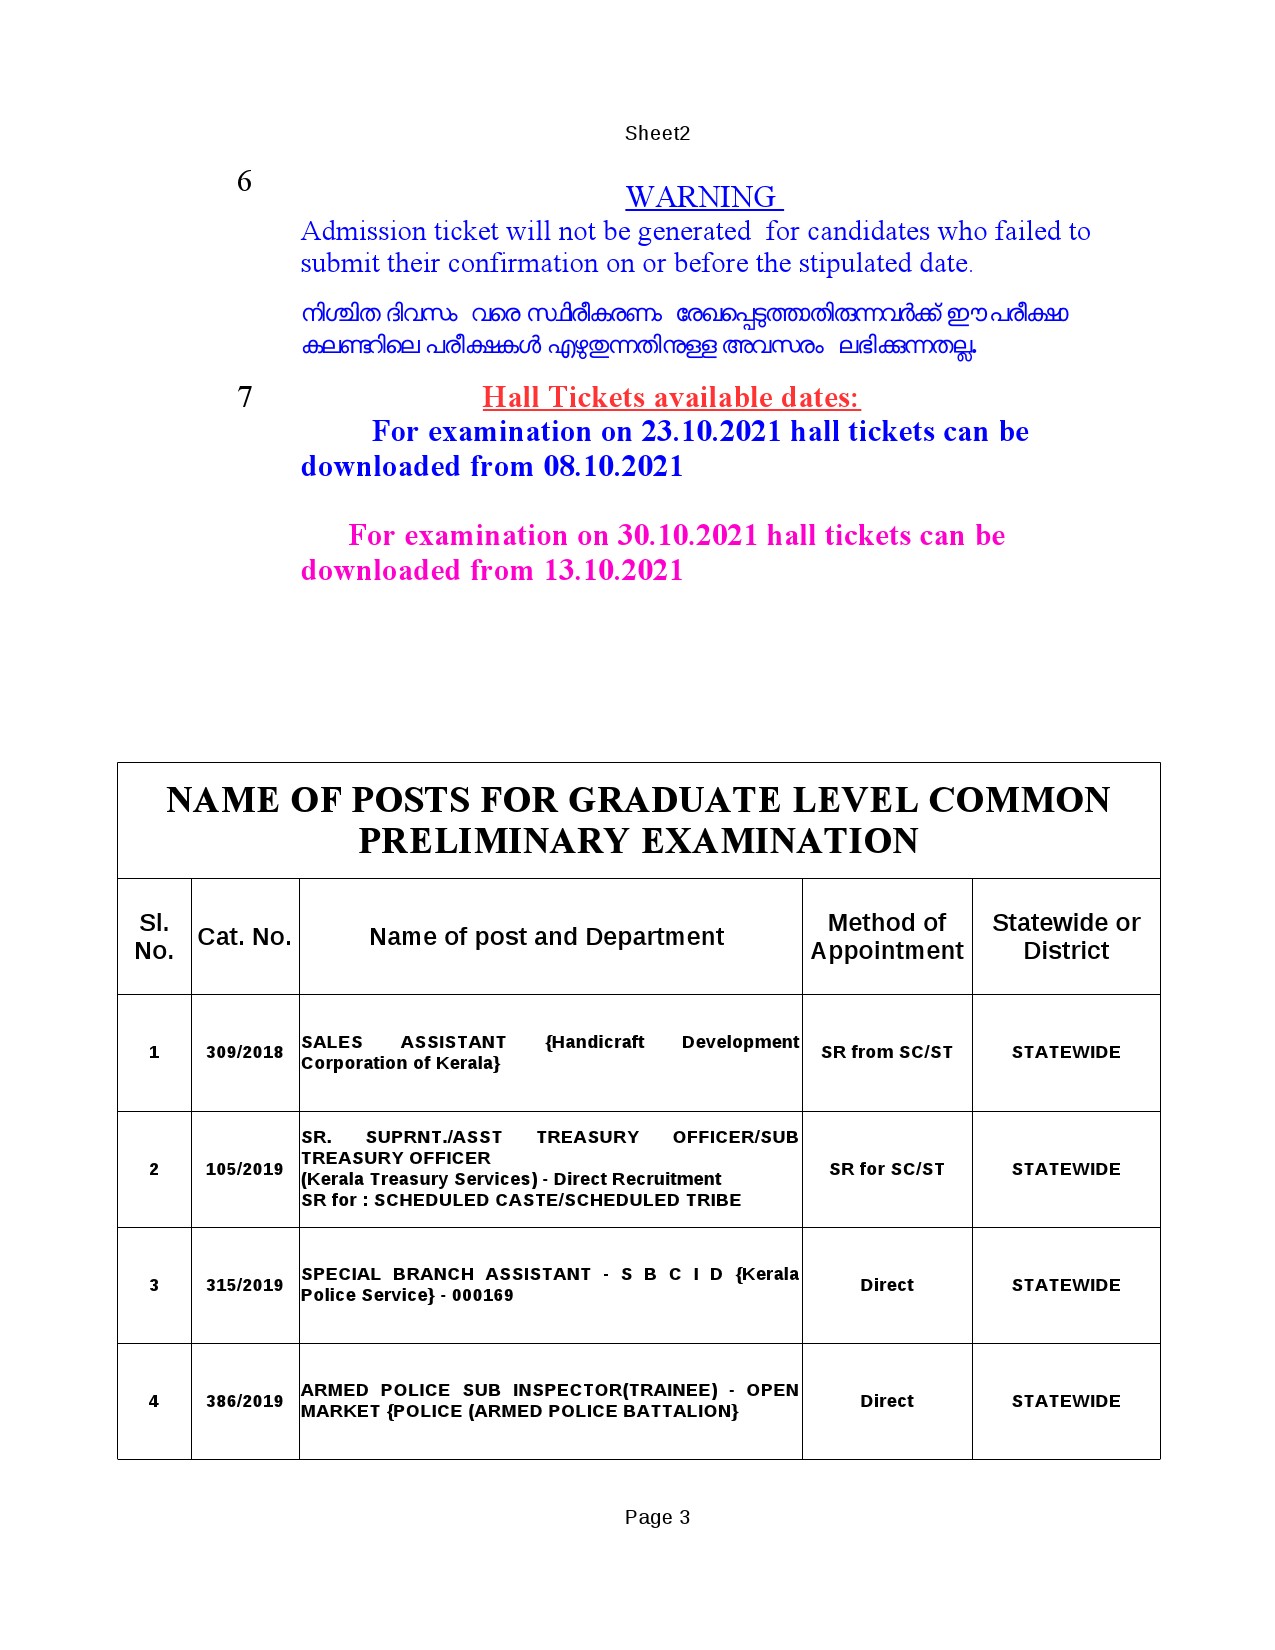 KPSC Programme For Graduate Level Common Preliminary Examination - Notification Image 3